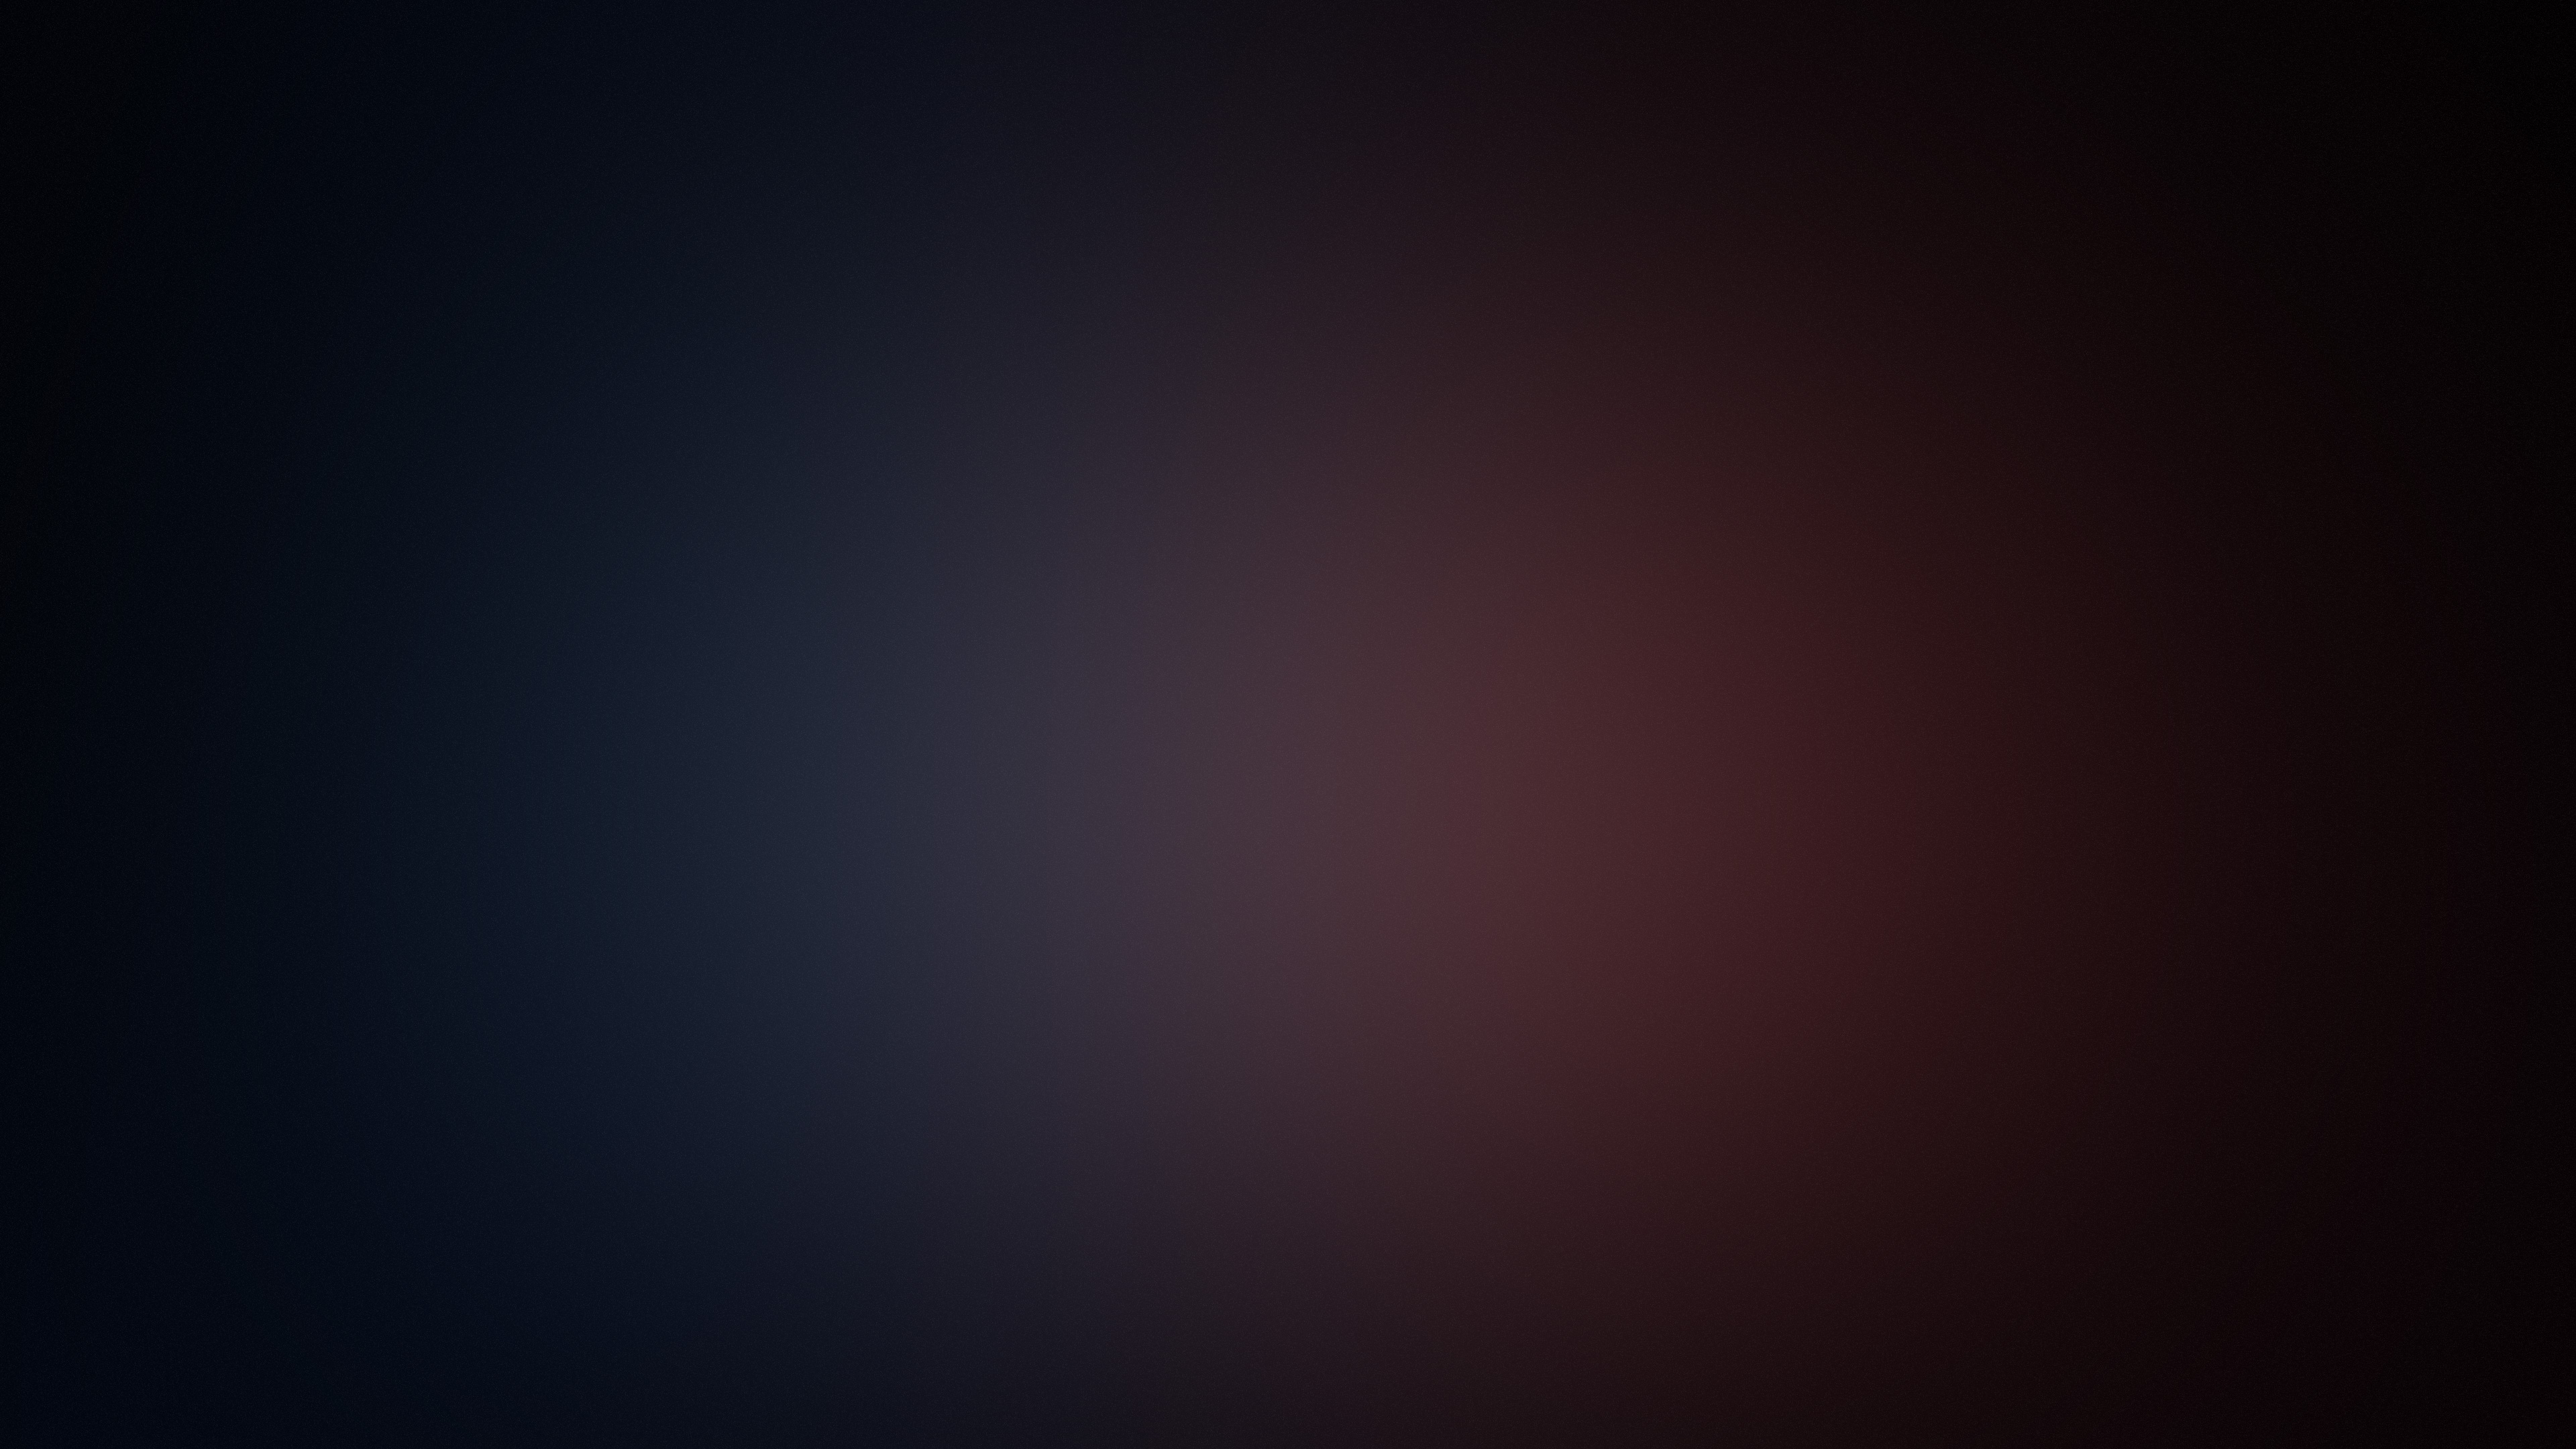 Simple Subtle Abstract Dark Minimalism 4k, HD Artist, 4k Wallpapers